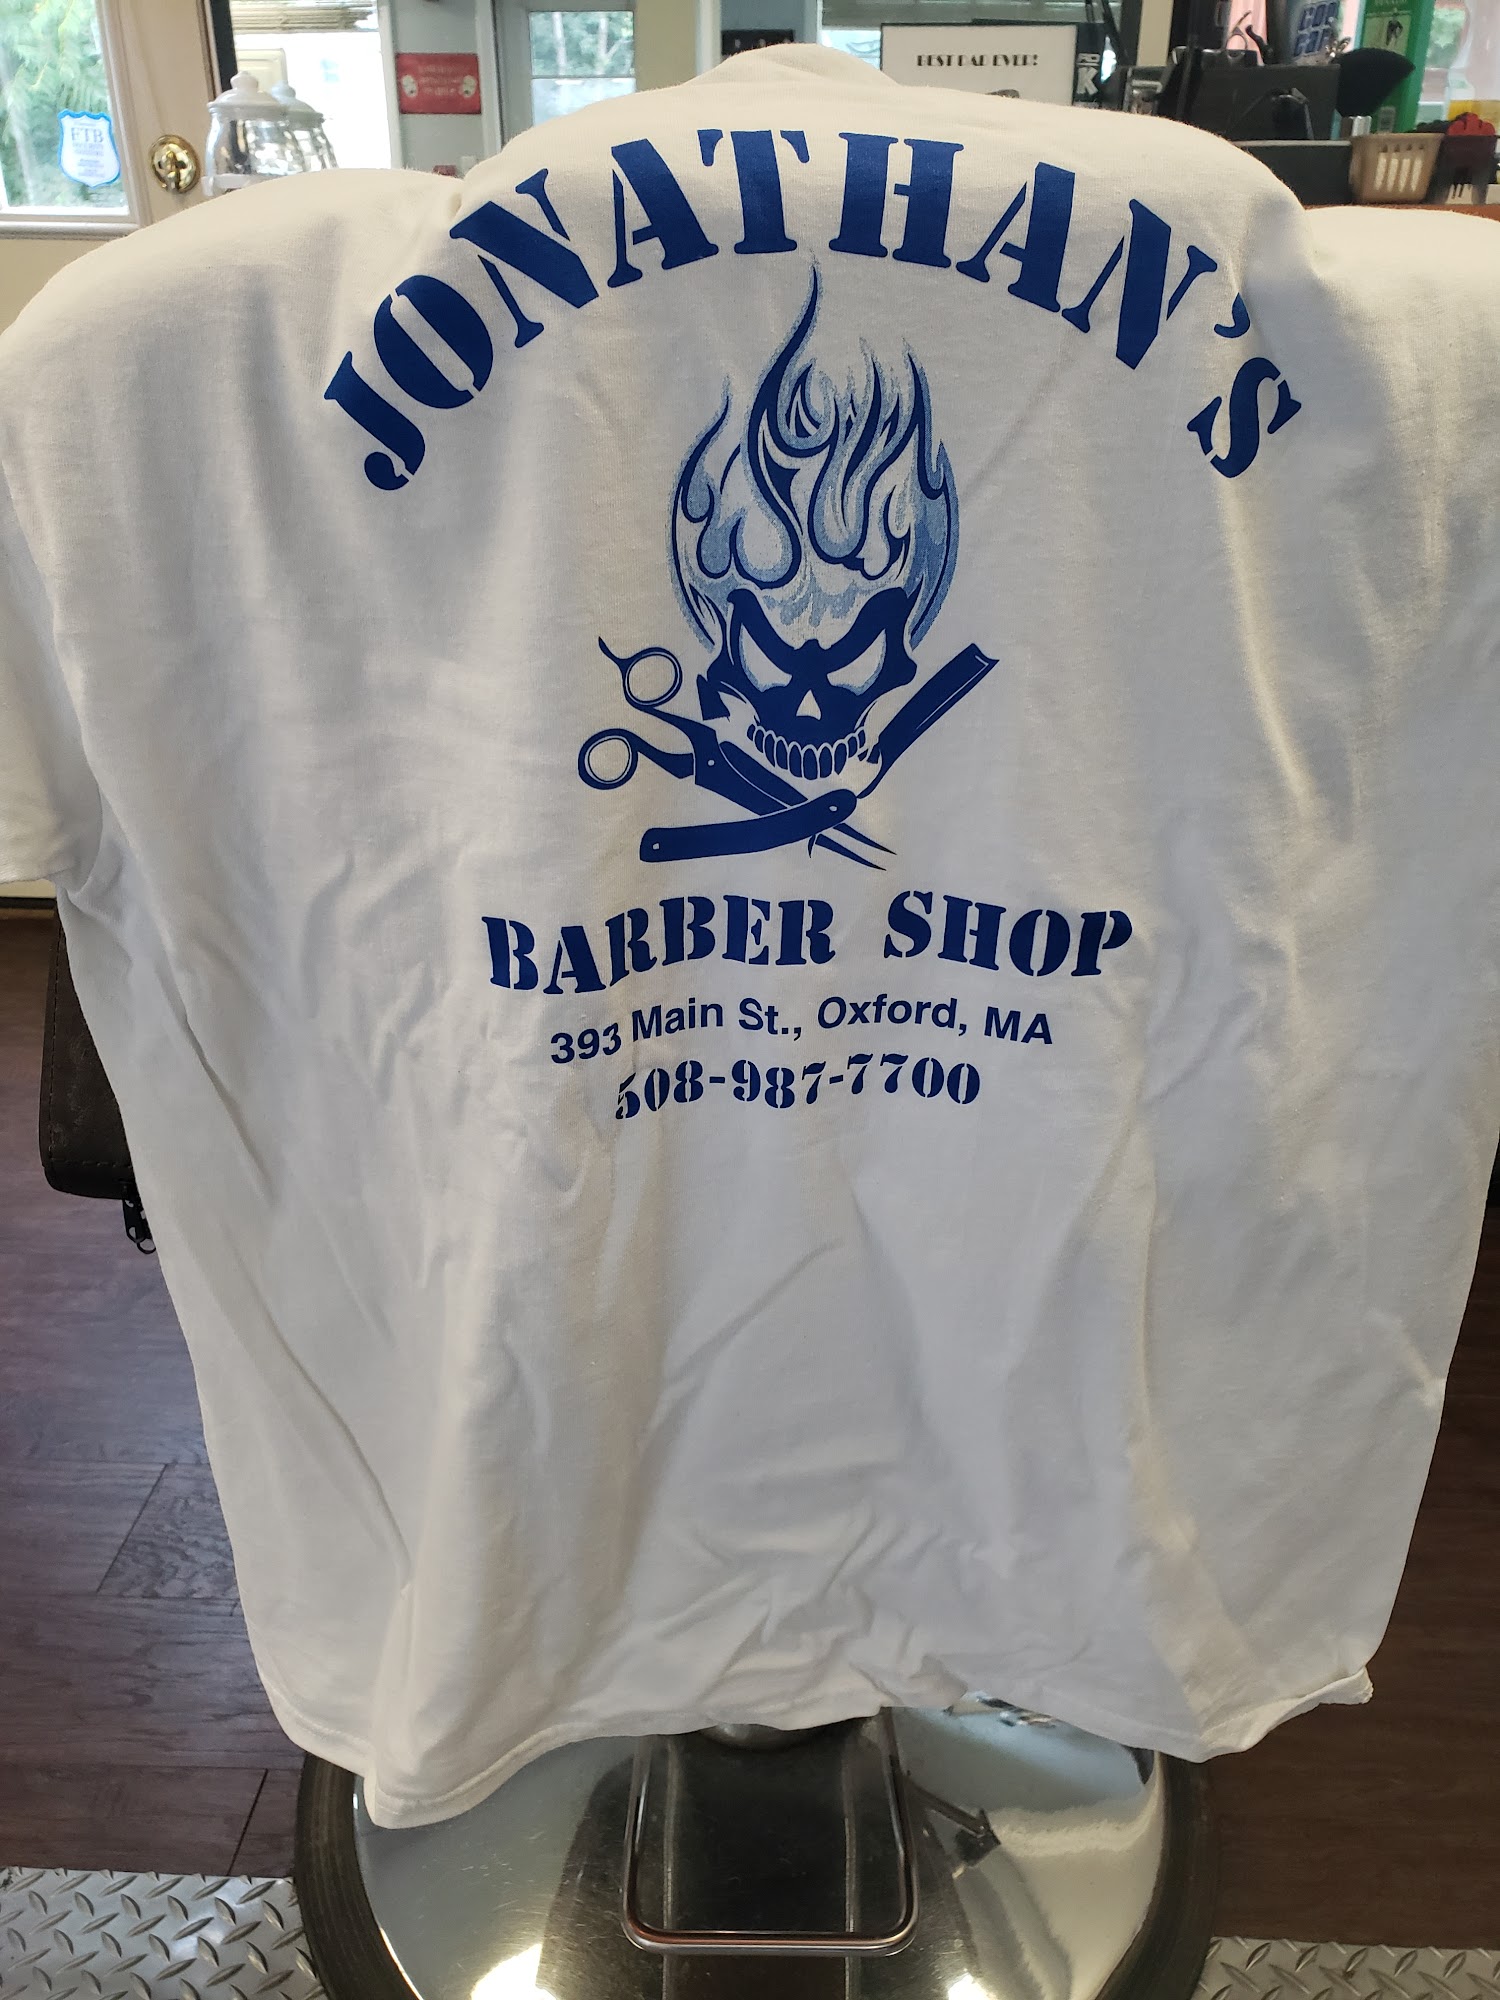 Jonathan's Barber Shop 393 Main St, Oxford Massachusetts 01540